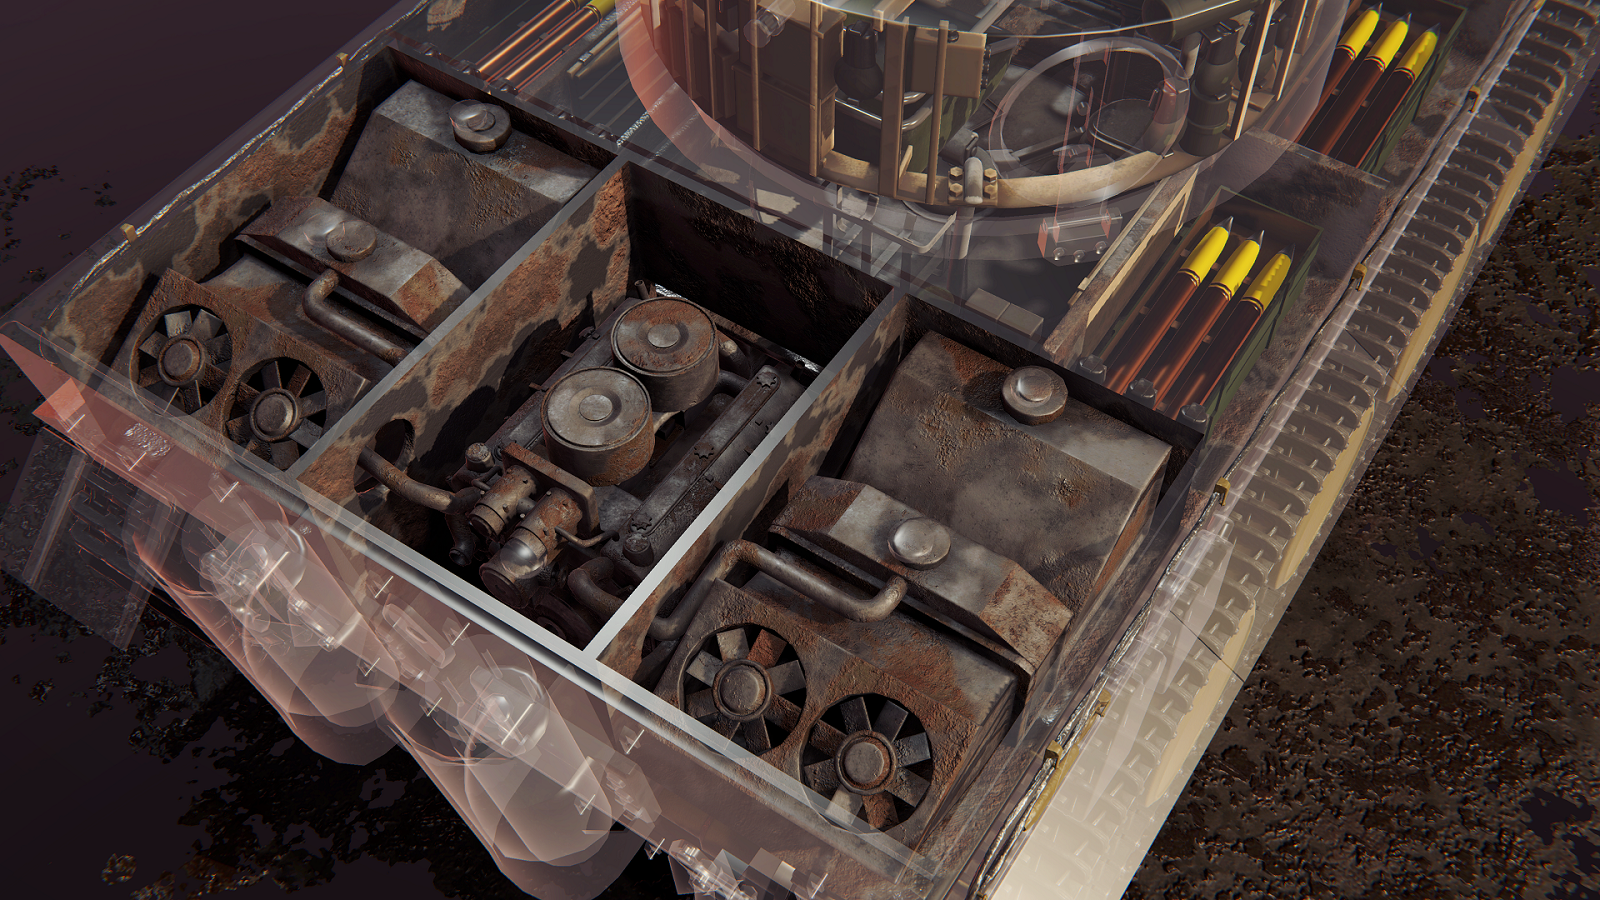 tank mechanic simulator update